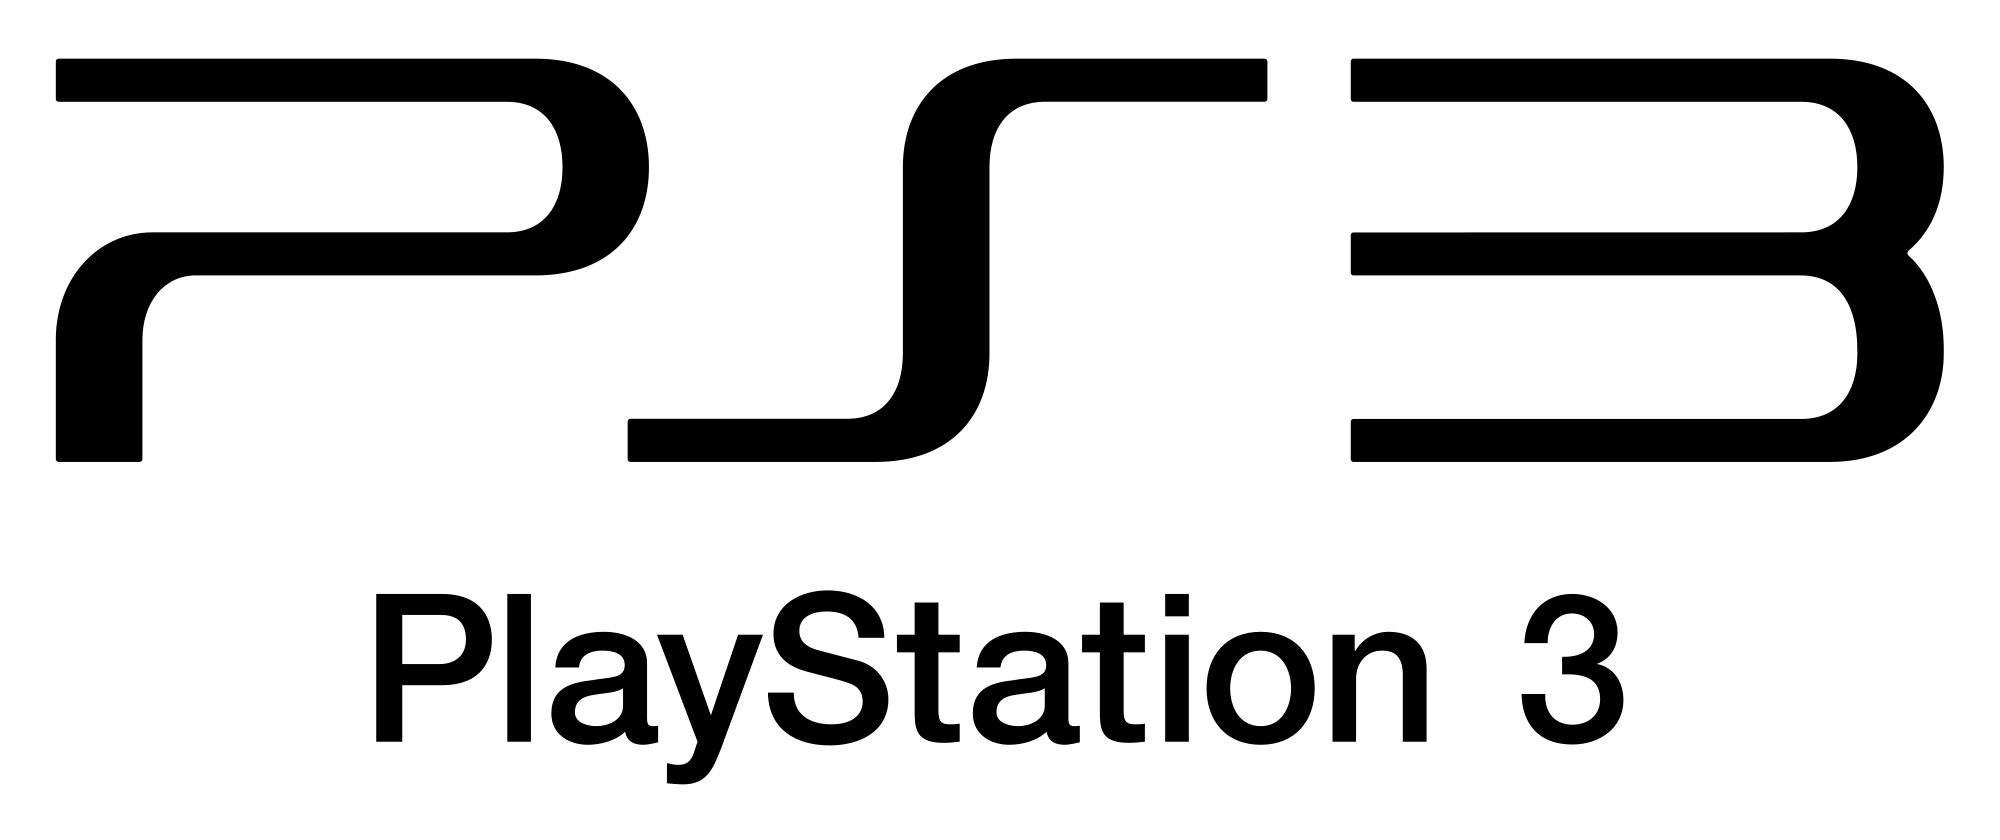 PlayStation 3 Logo - File:PlayStation 3 Logo neu.svg - Wikimedia Commons